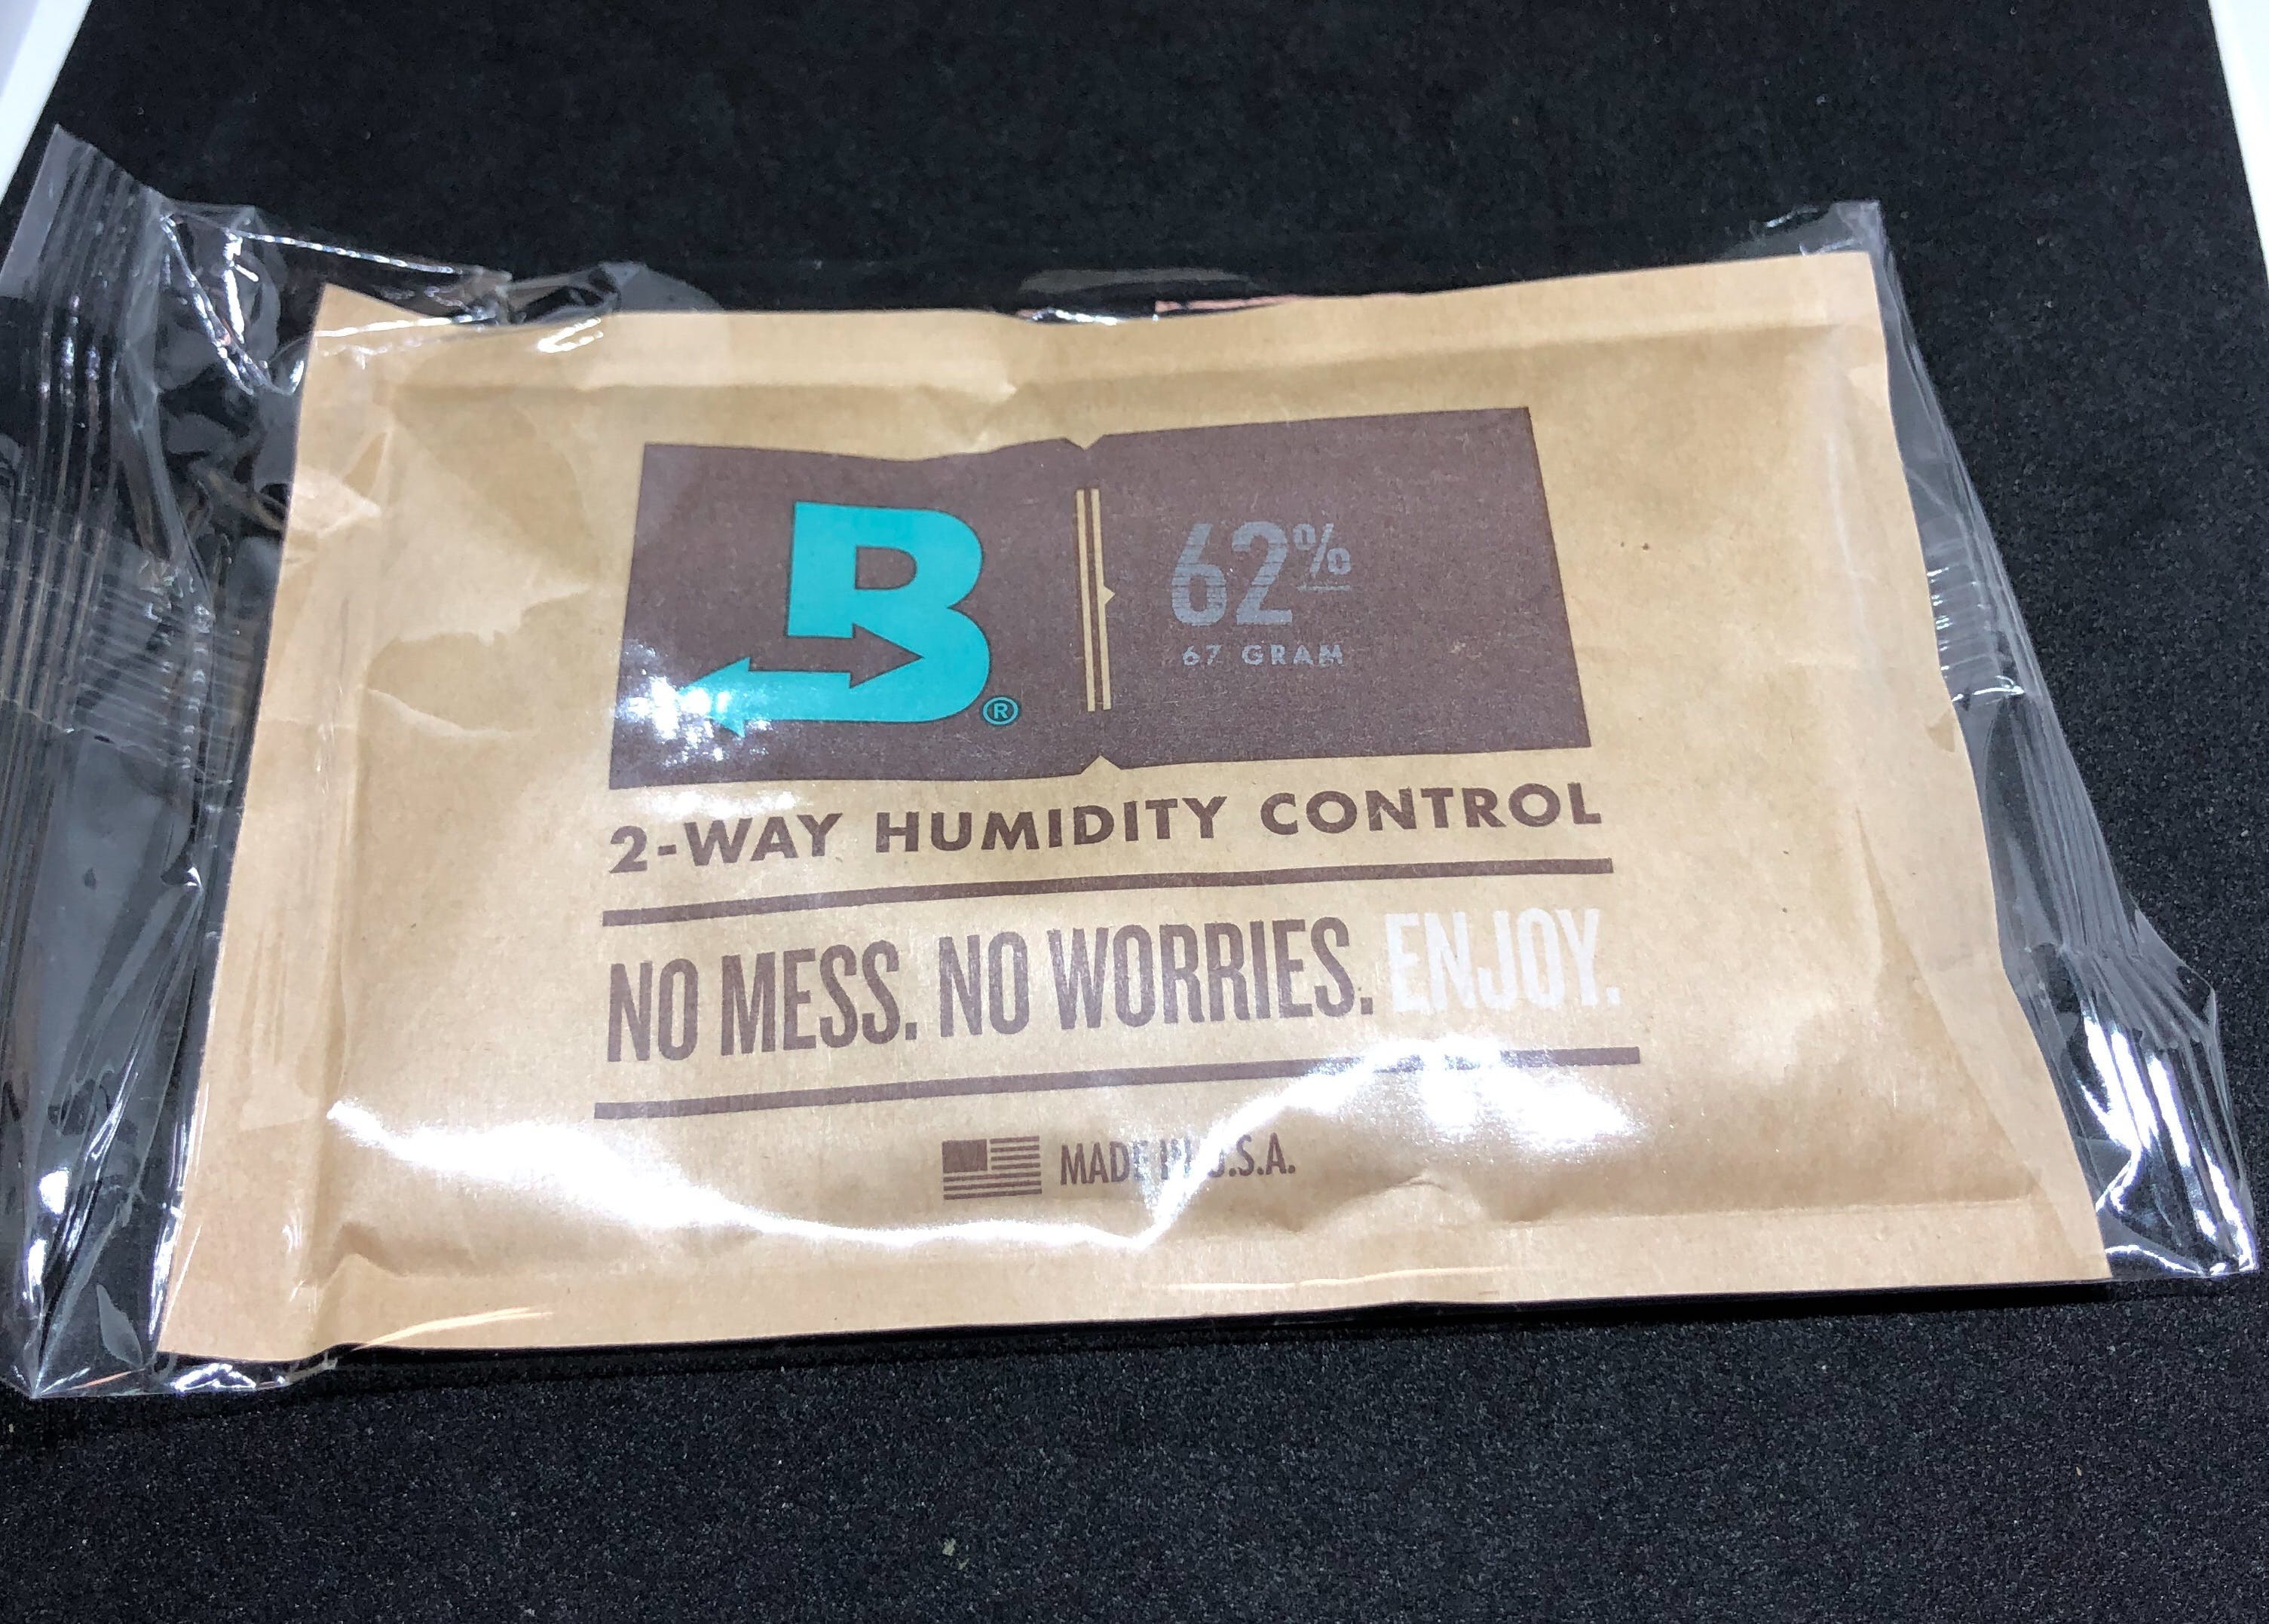 gear-boveda-2-way-humidity-control-packs-67-gram